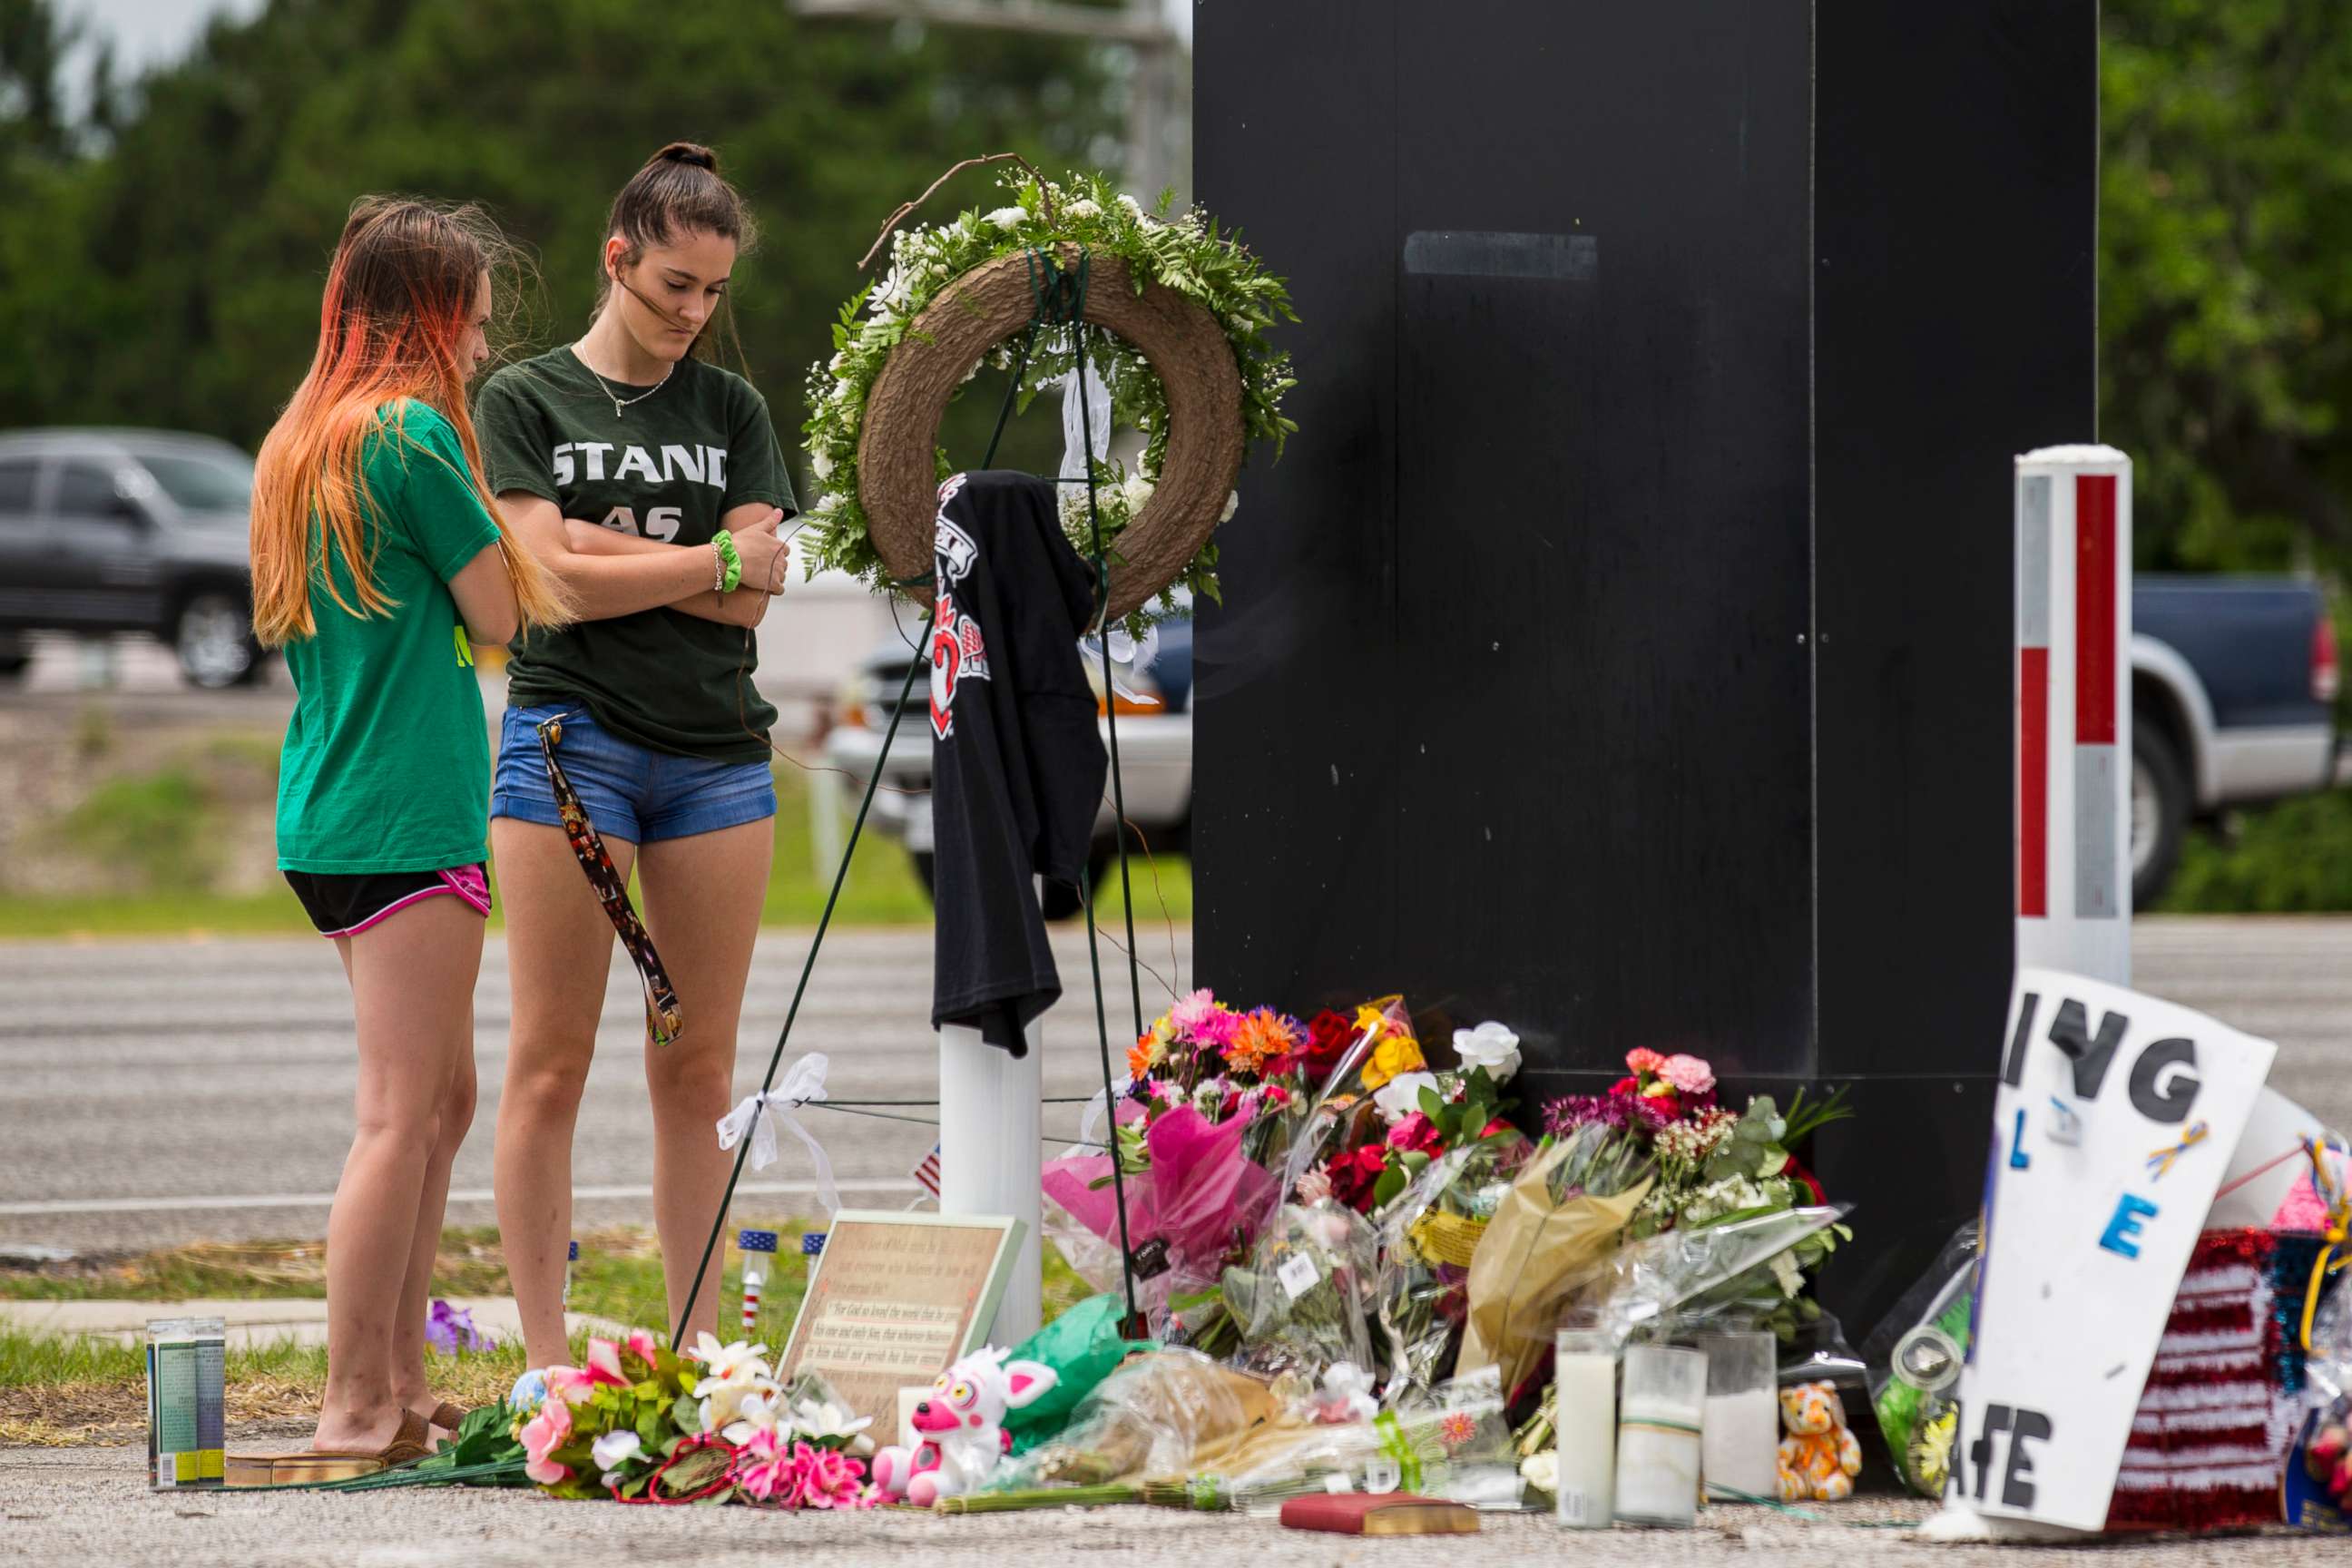 PHOTO: Kalysta Dodson, left, and Reagyn Murphy, sophomores at Santa Fe High School, look at a memorial for the victims of the Santa Fe High School shooting in Santa Fe, Texas.